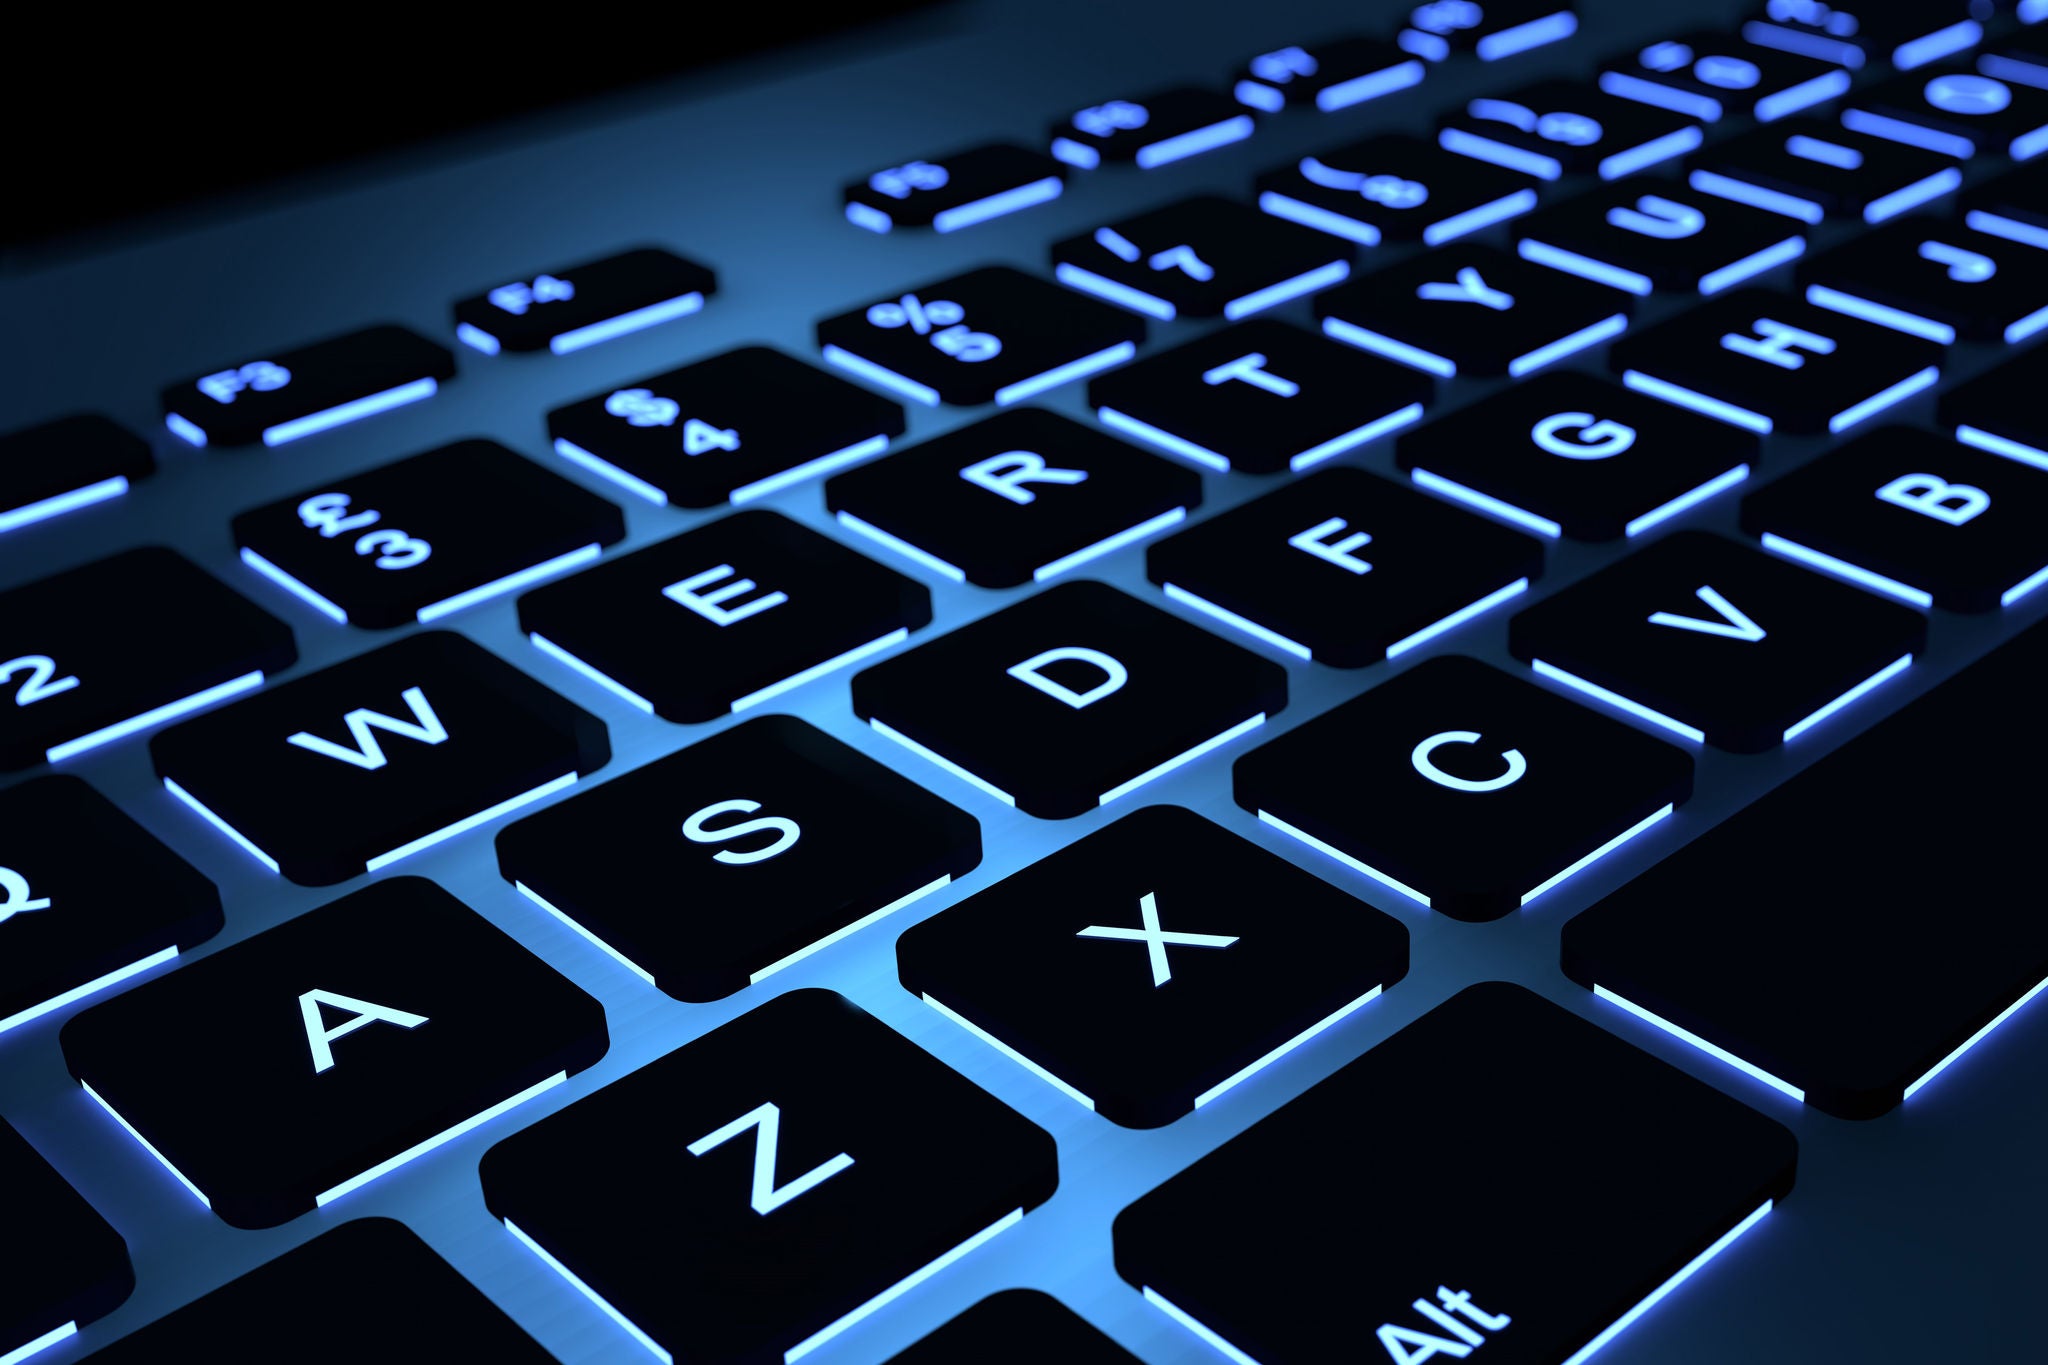 Black and blue backlight keyboard